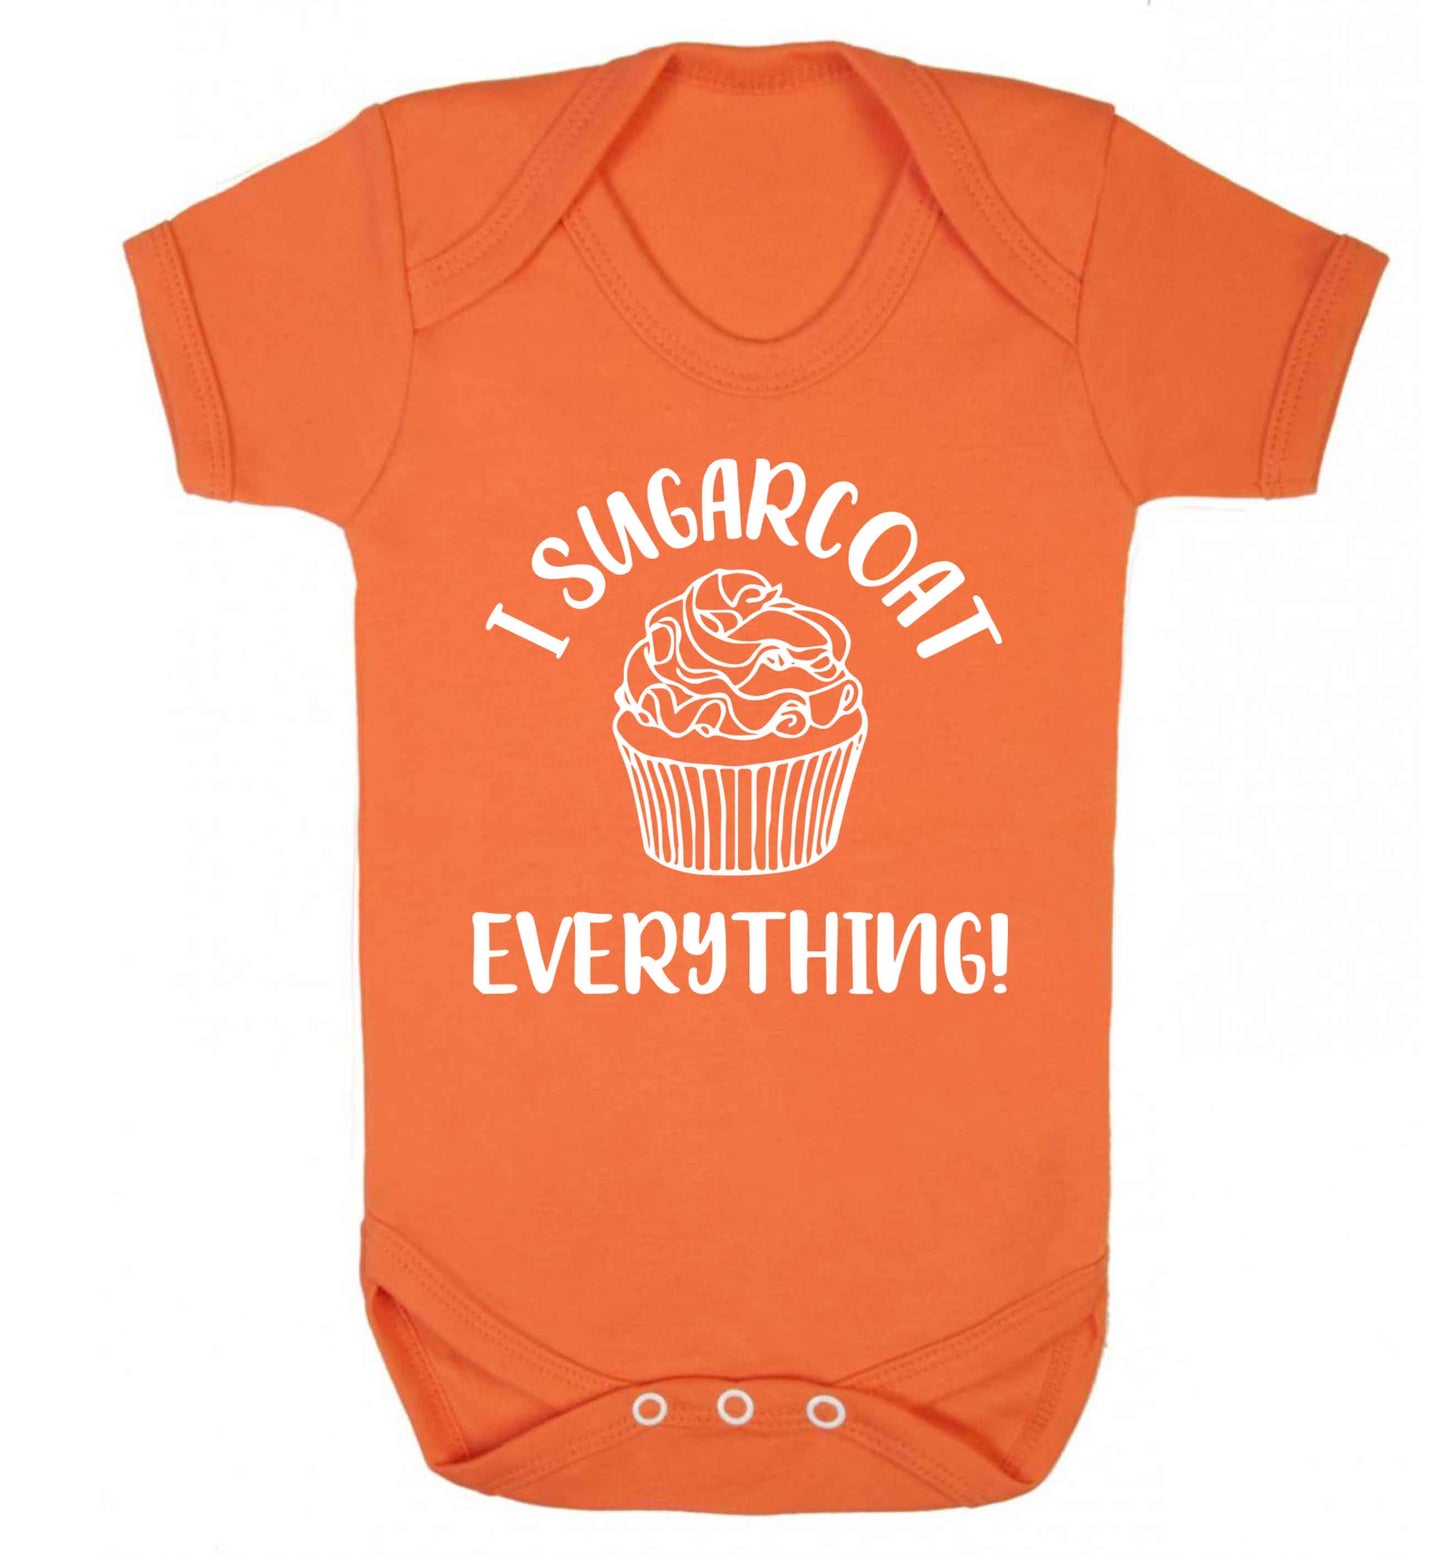 I sugarcoat everything Baby Vest orange 18-24 months